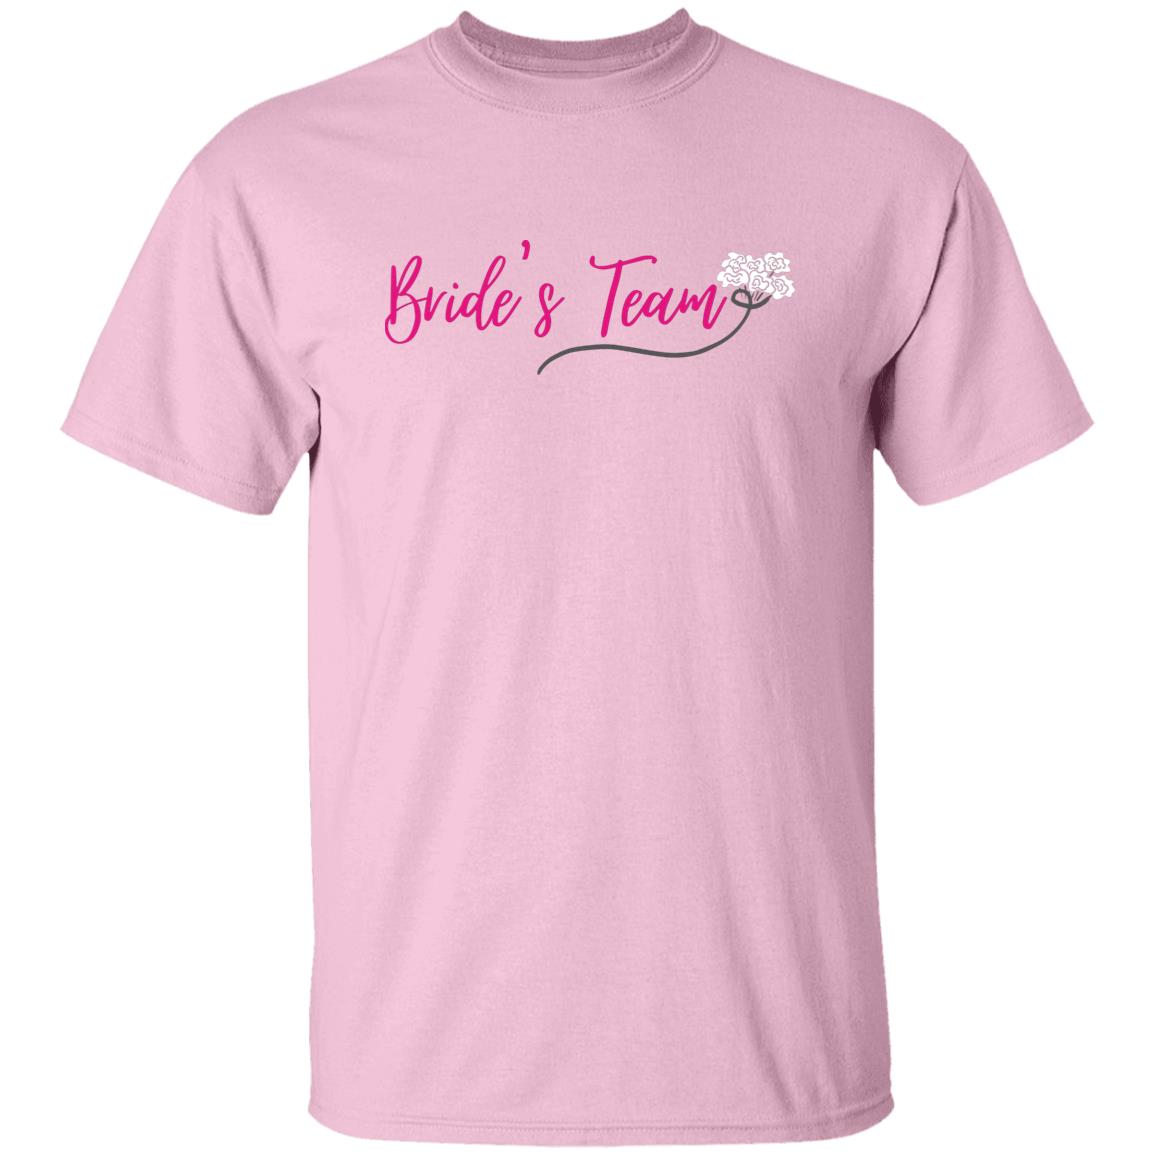 Bride's Team (Pink Print) G500 5.3 oz. T-Shirt